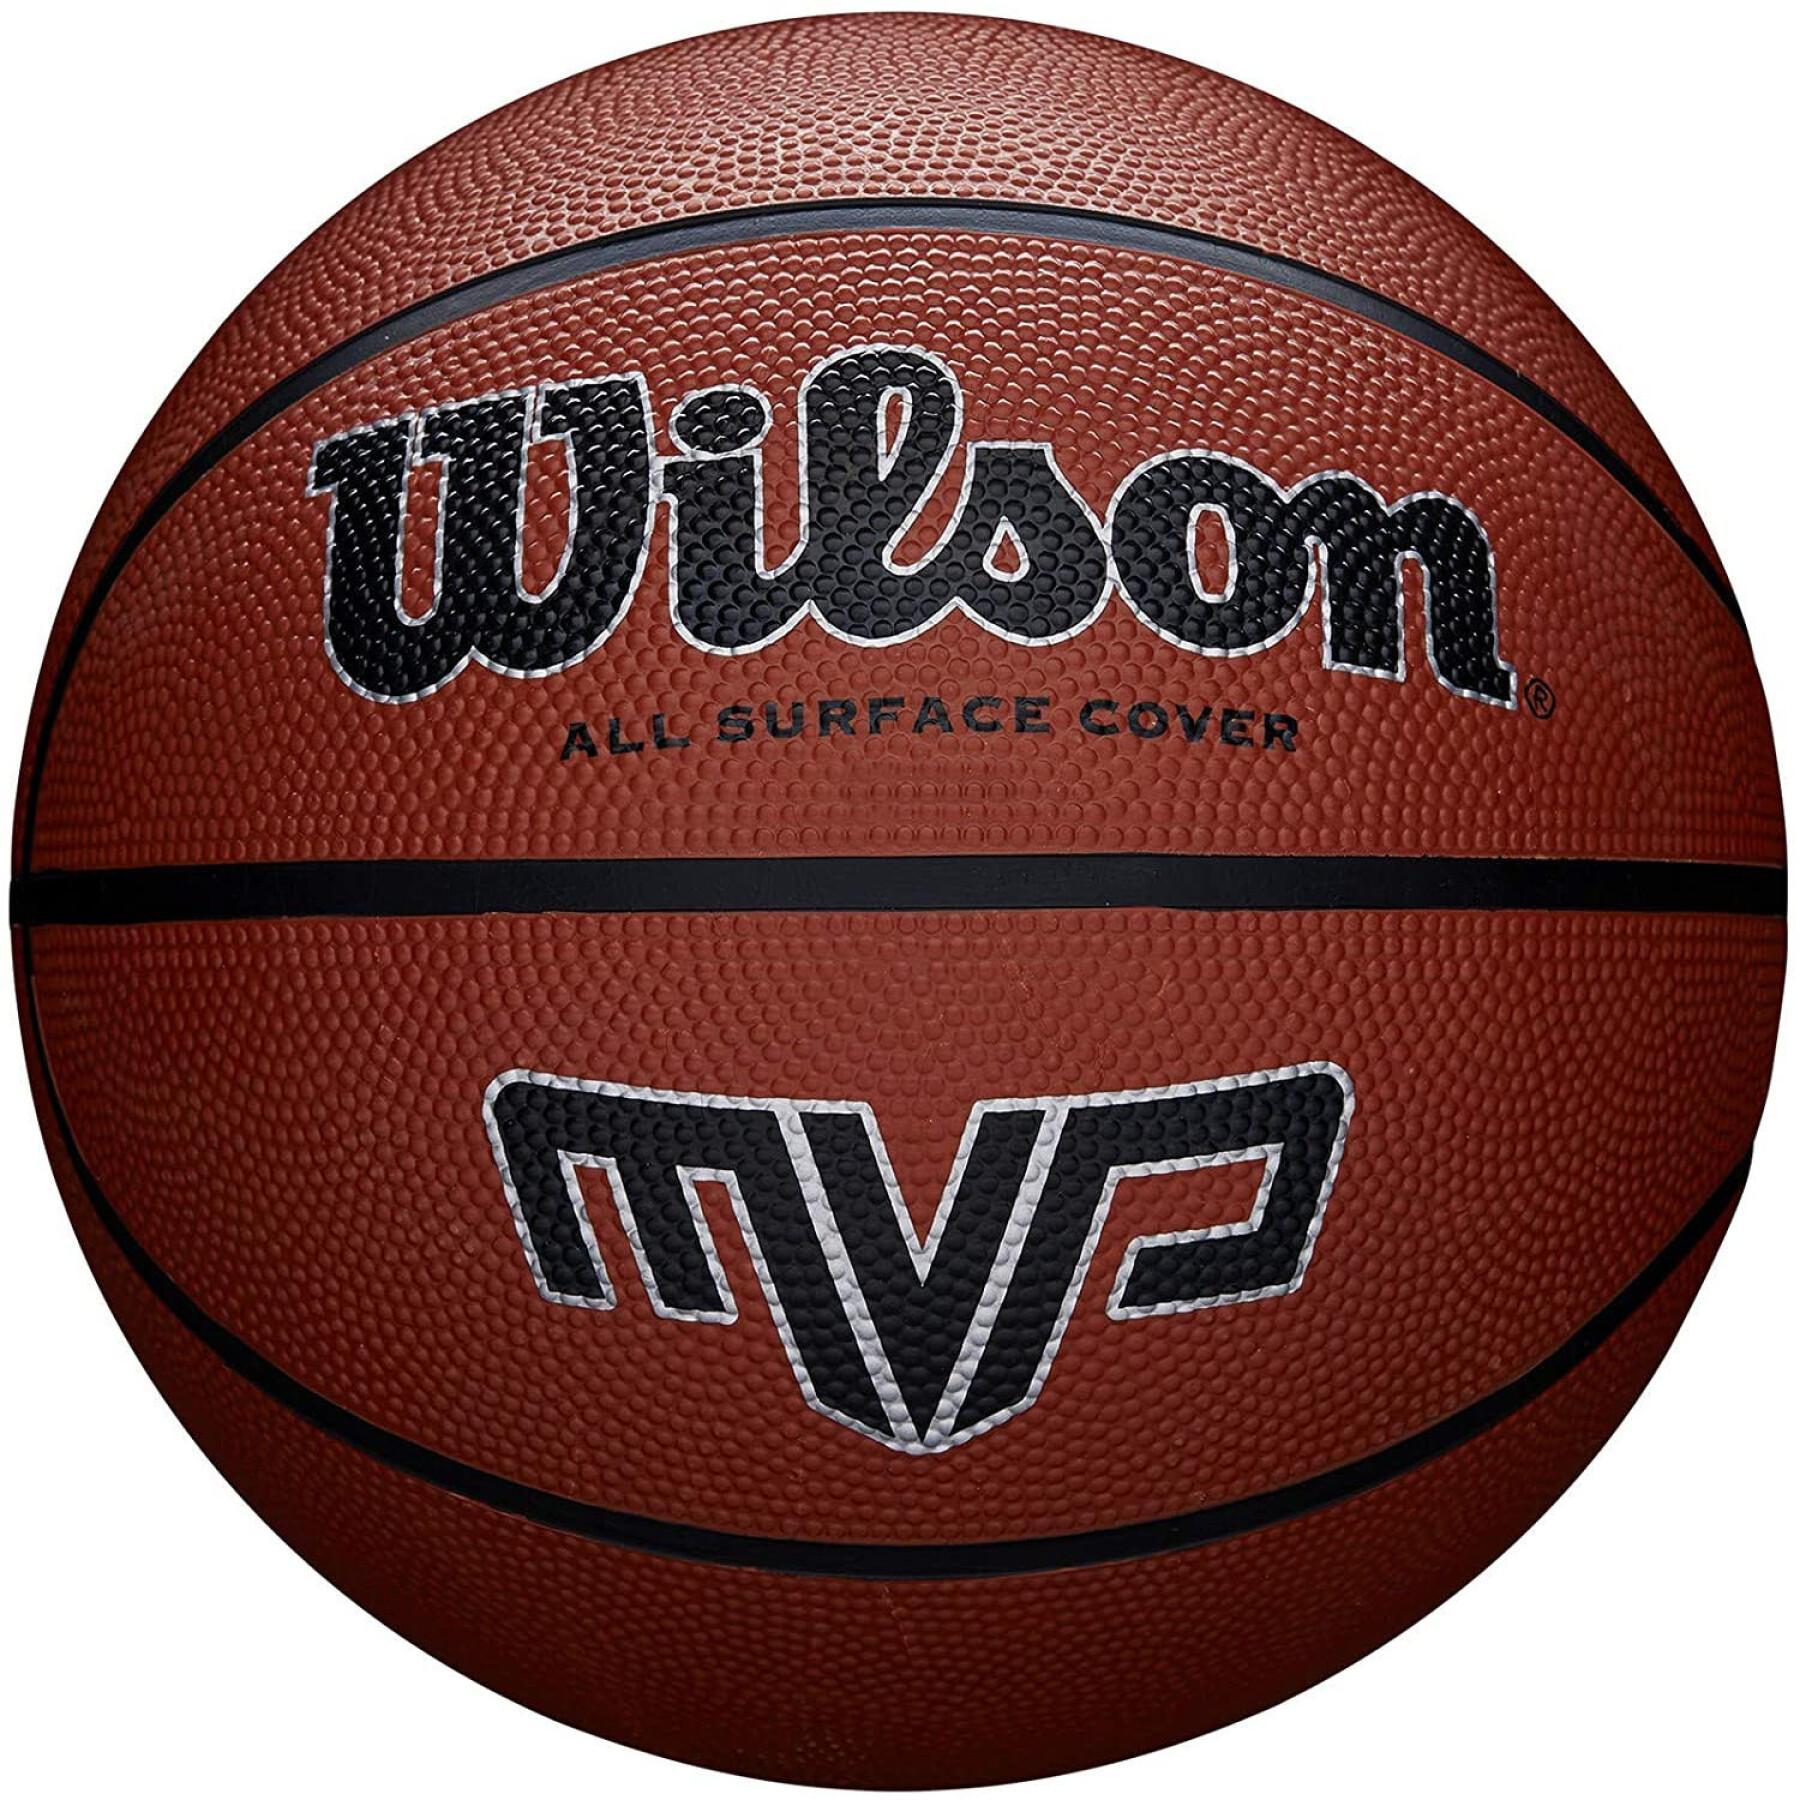 Ballon Wilson MVP 275 Classic